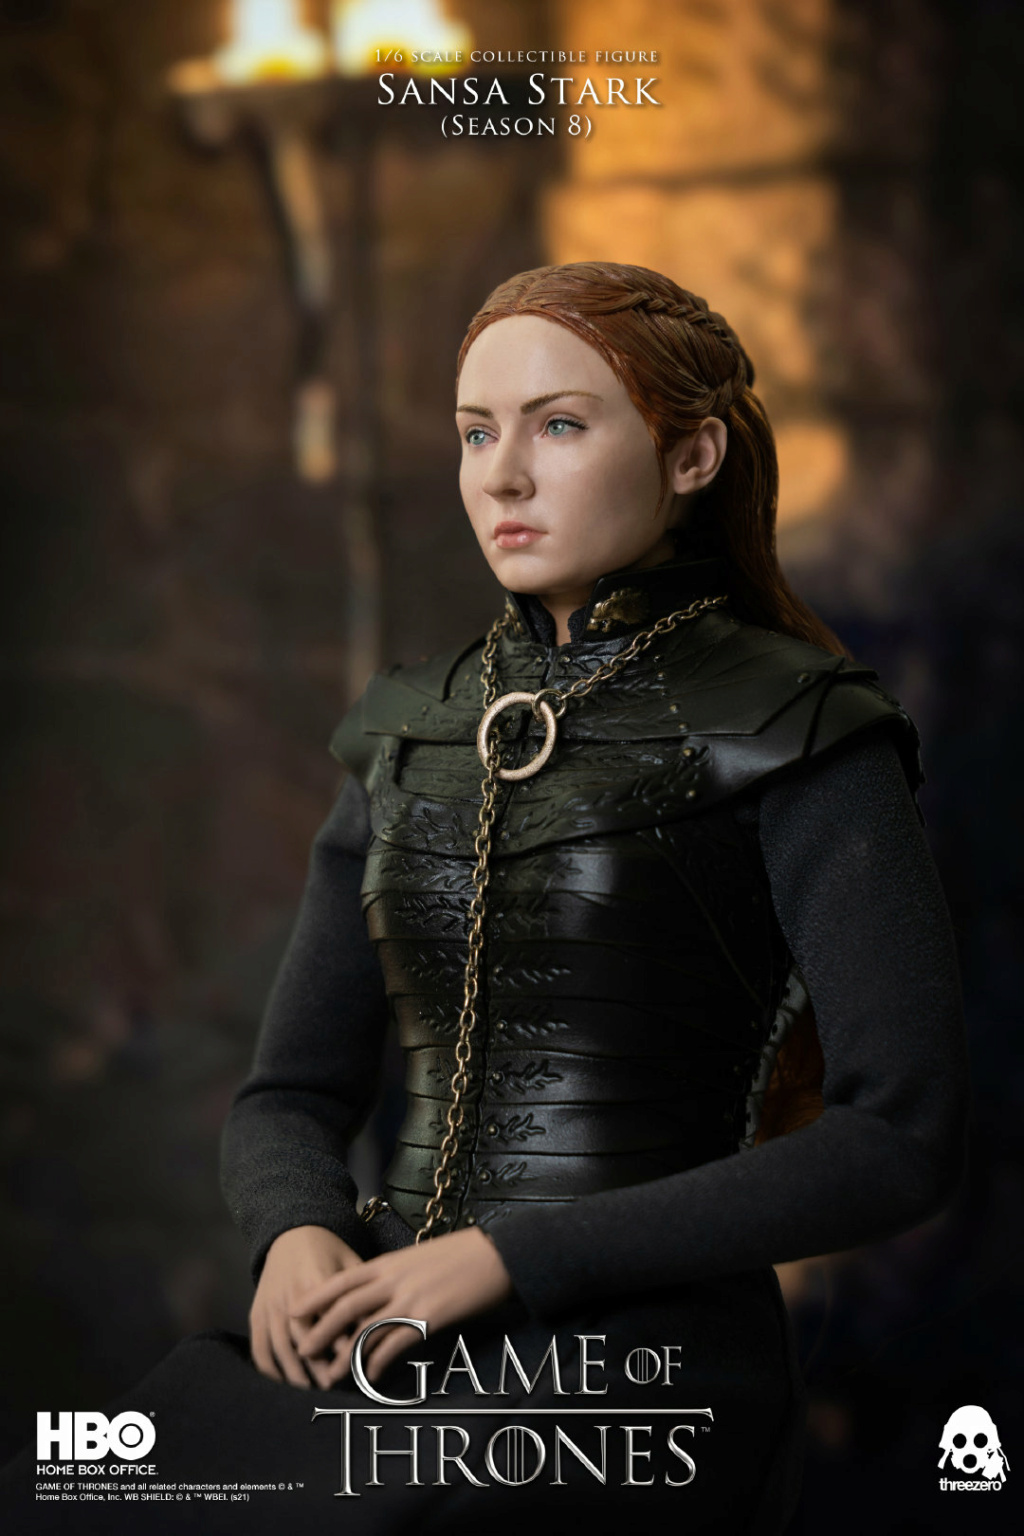 hbo - NEW PRODUCT: Threezero: 1/6 "A Song of Ice and Fire: Game of Thrones" Sansa Stark/Sansa Stark Action Figure 10183210